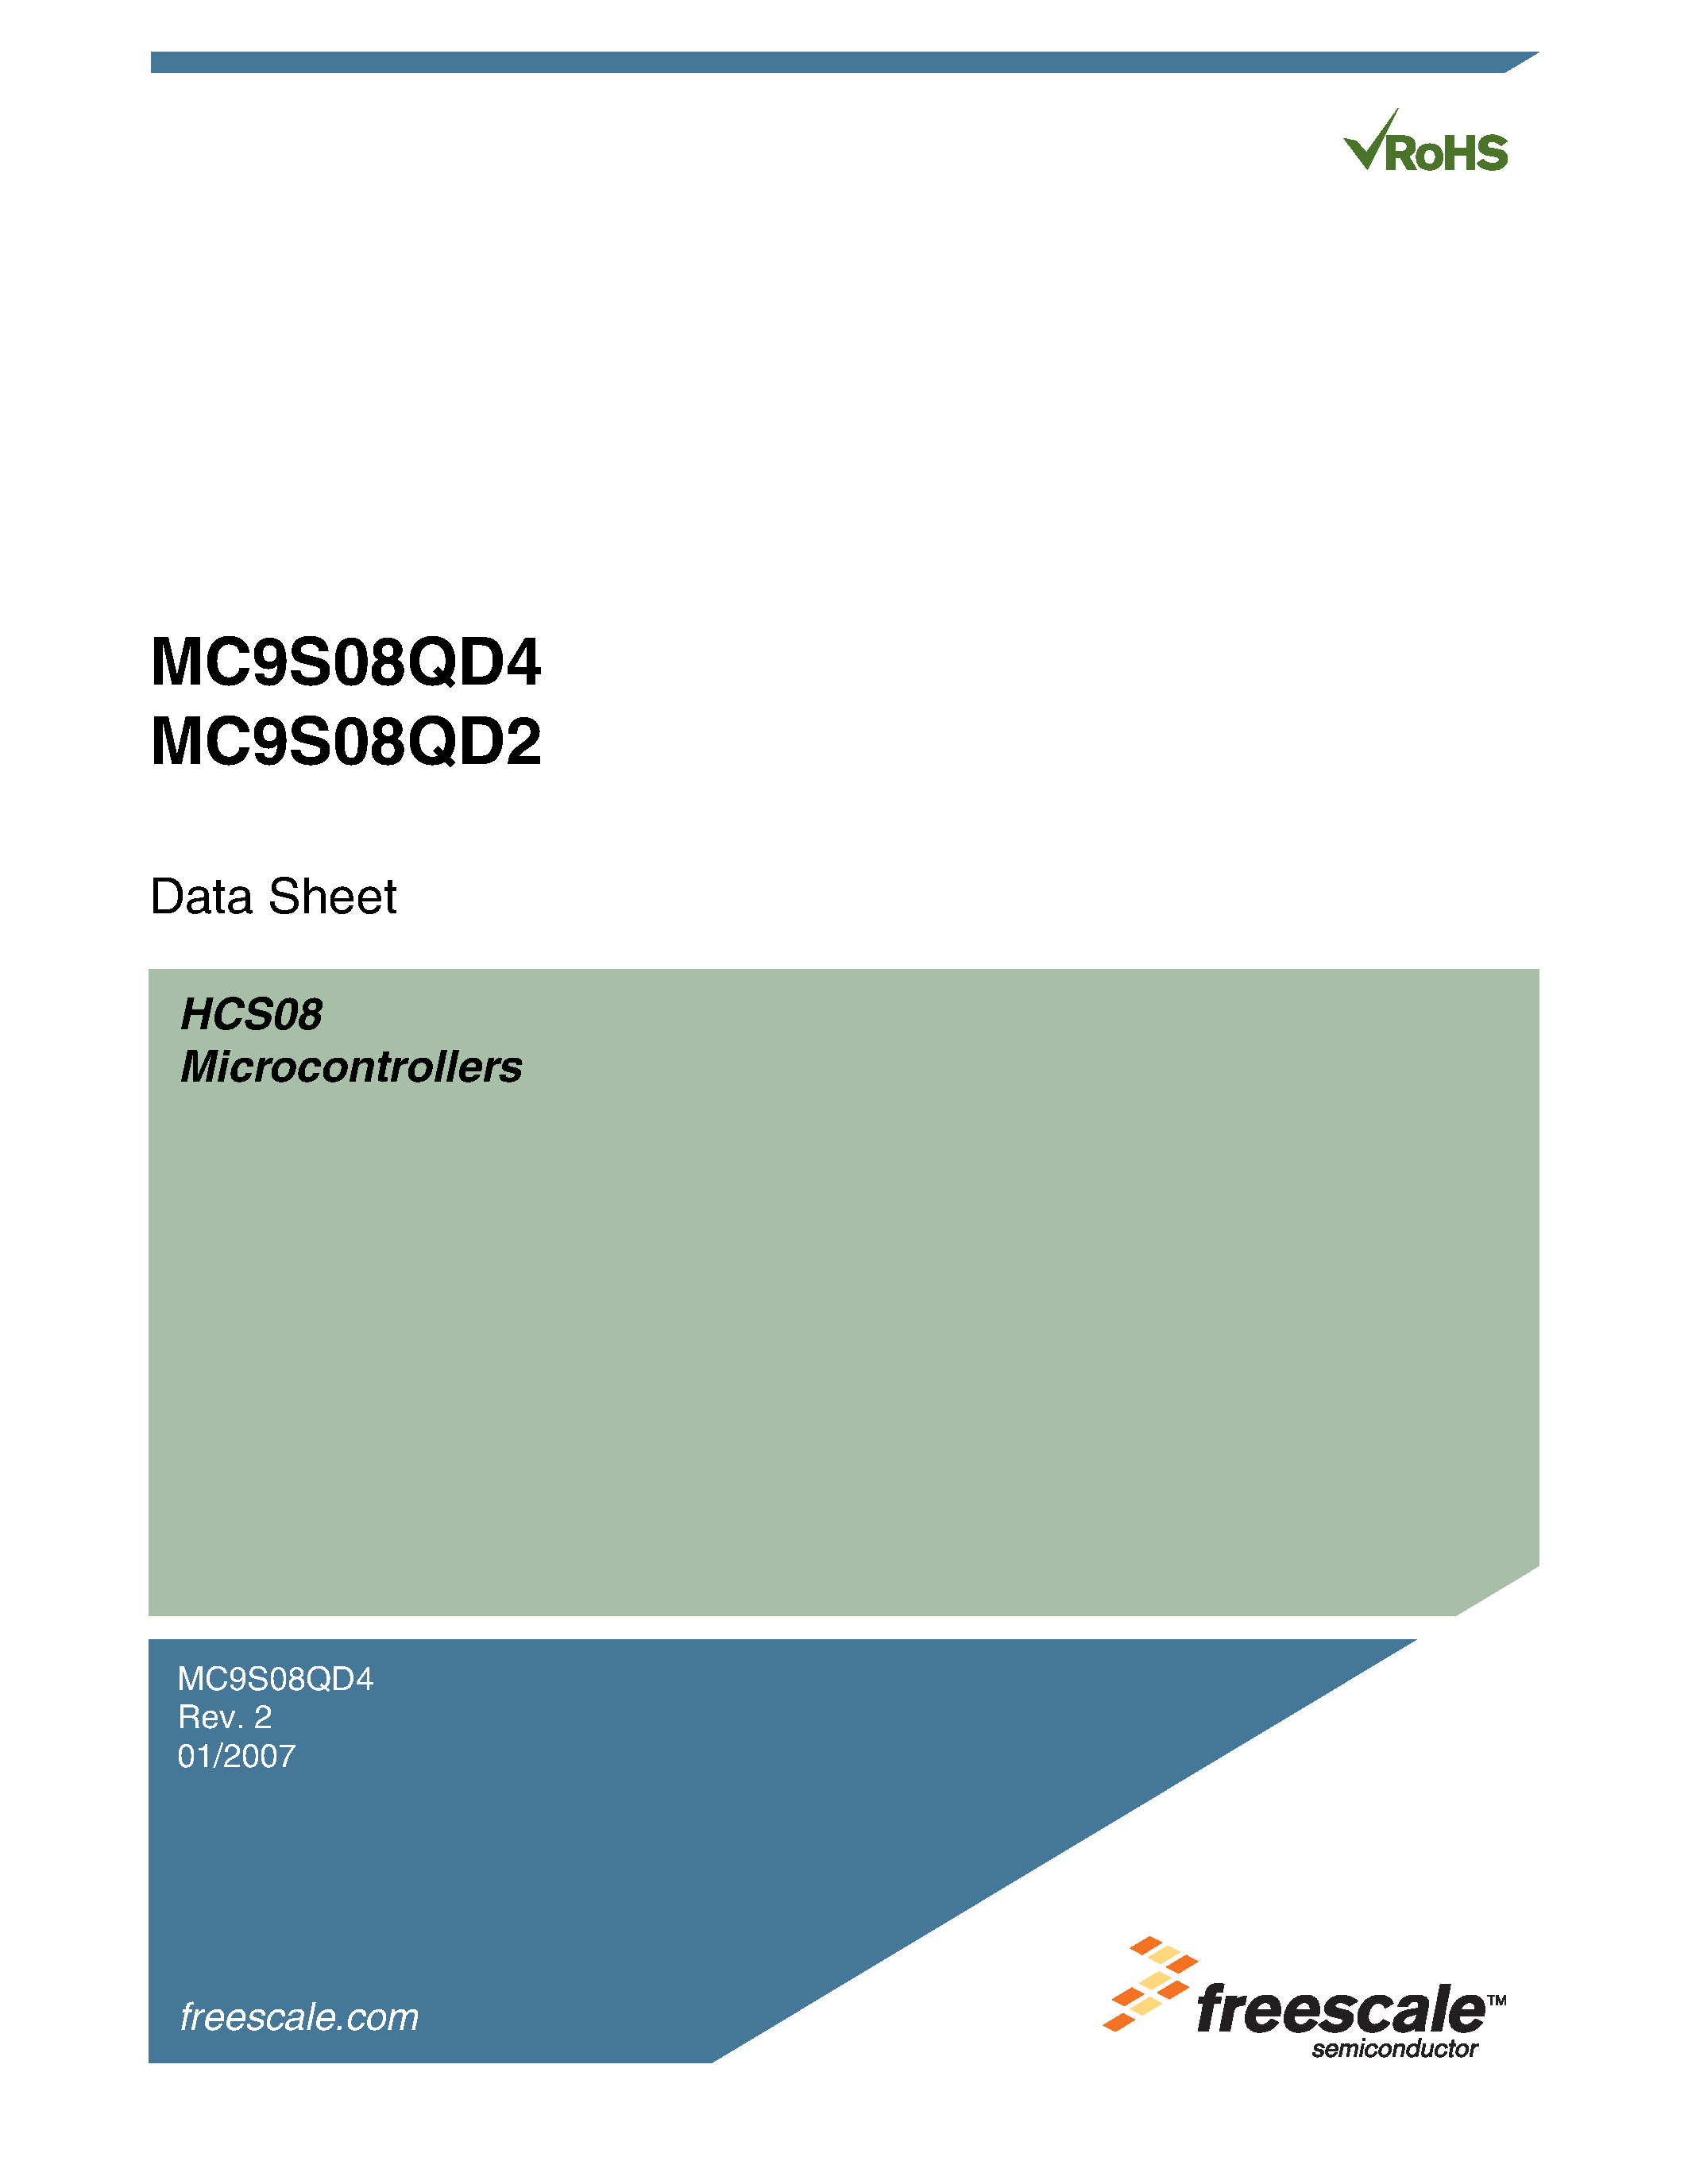 Datasheet MC9S08QD2 - (MC9S08QD2 / MC9S08QD4) Microcontrollers page 1